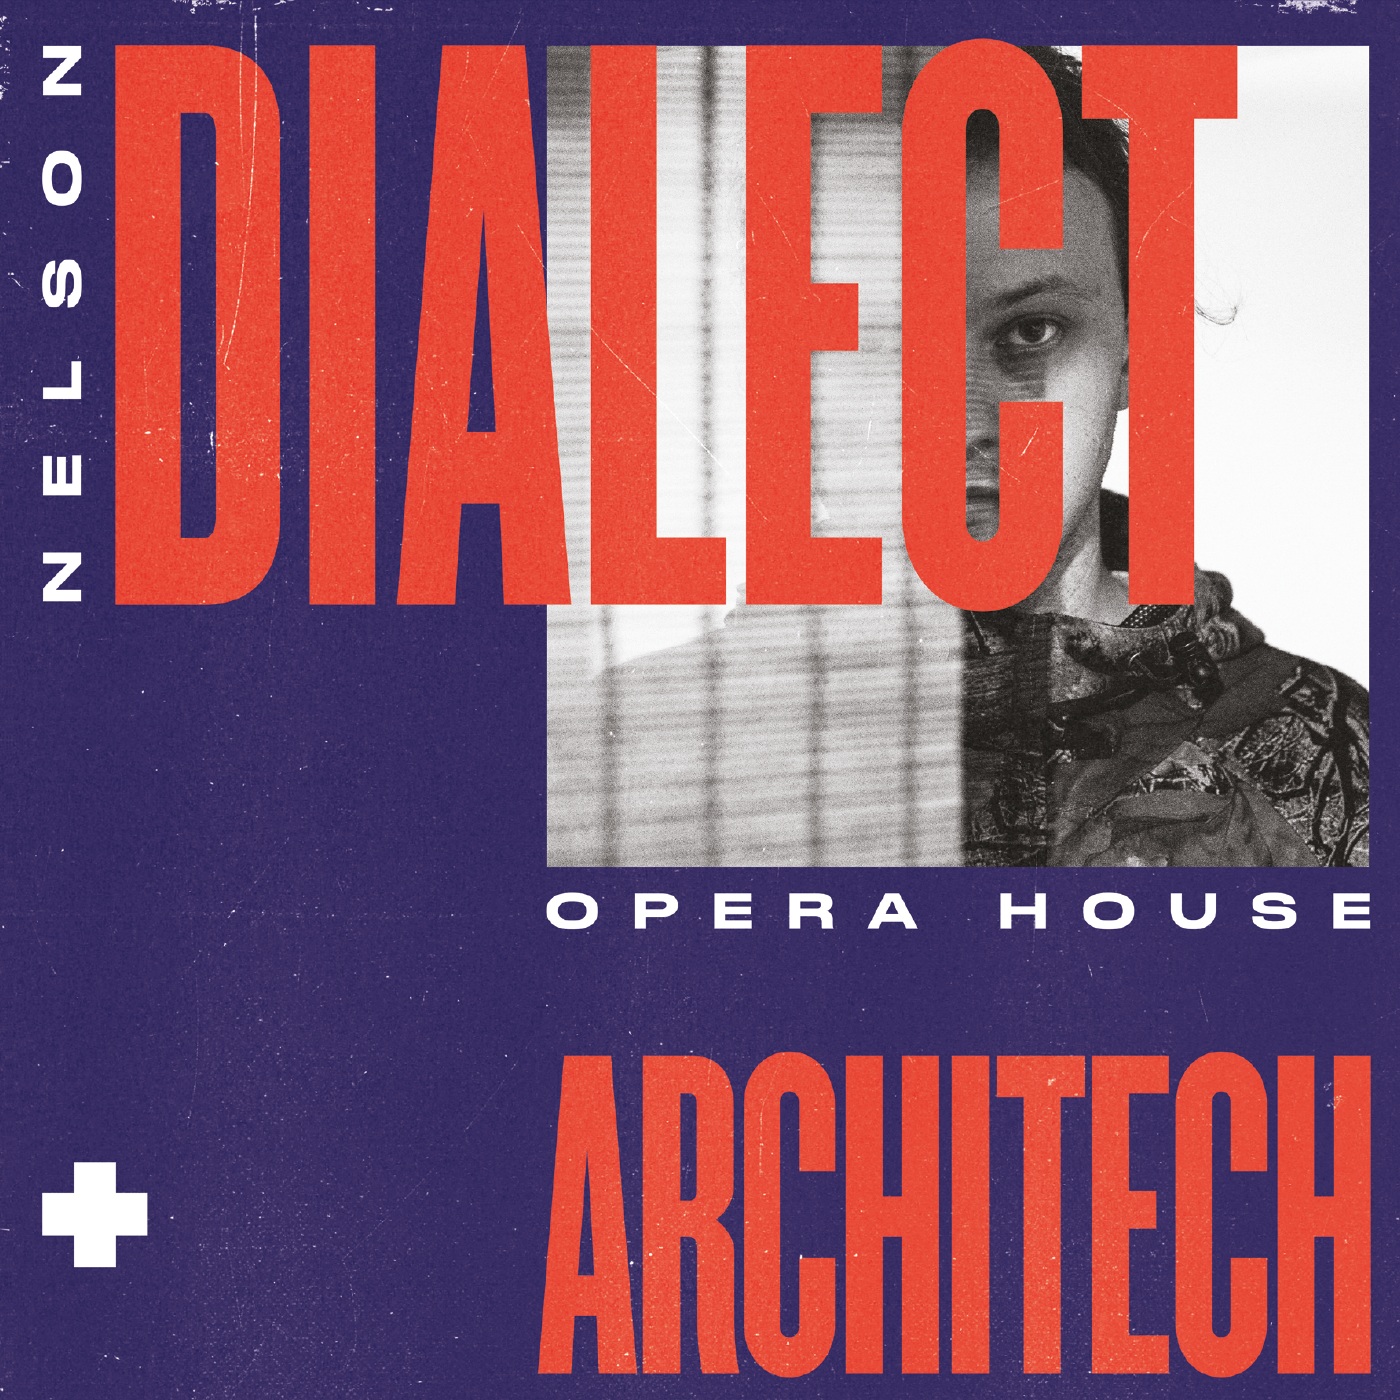 Opera House, Nelson Dialect, Architech